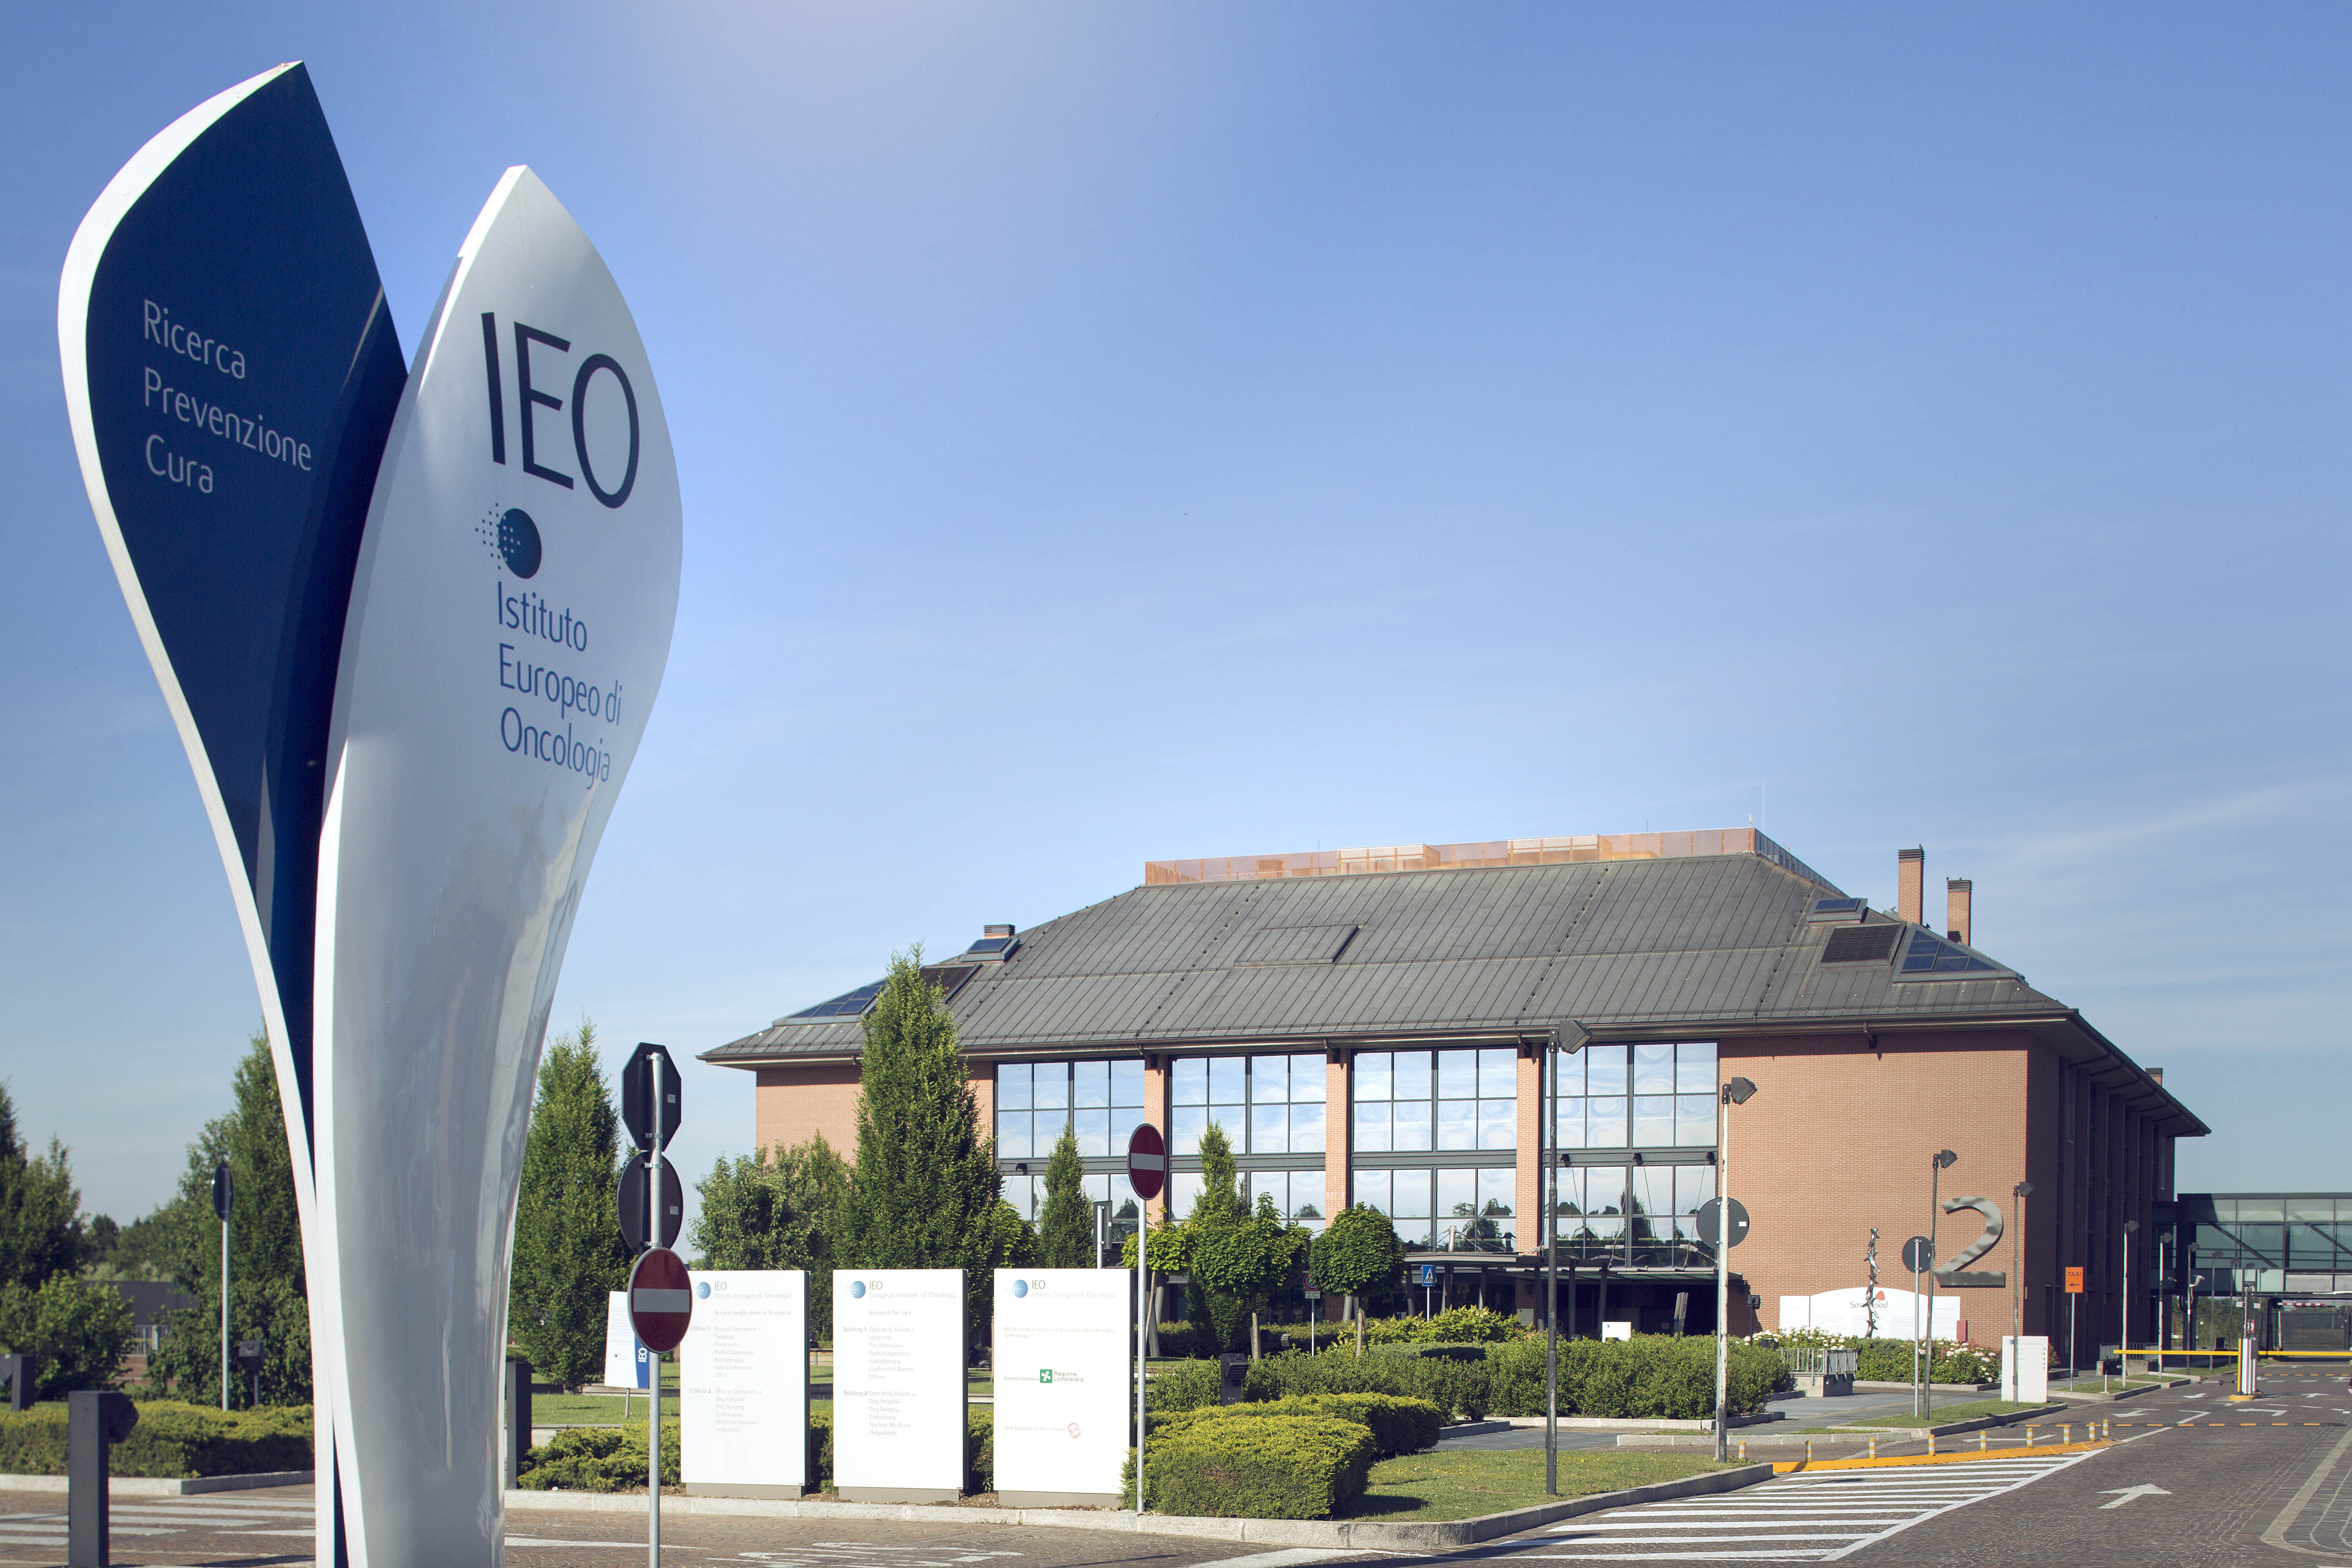 IEO headquarters